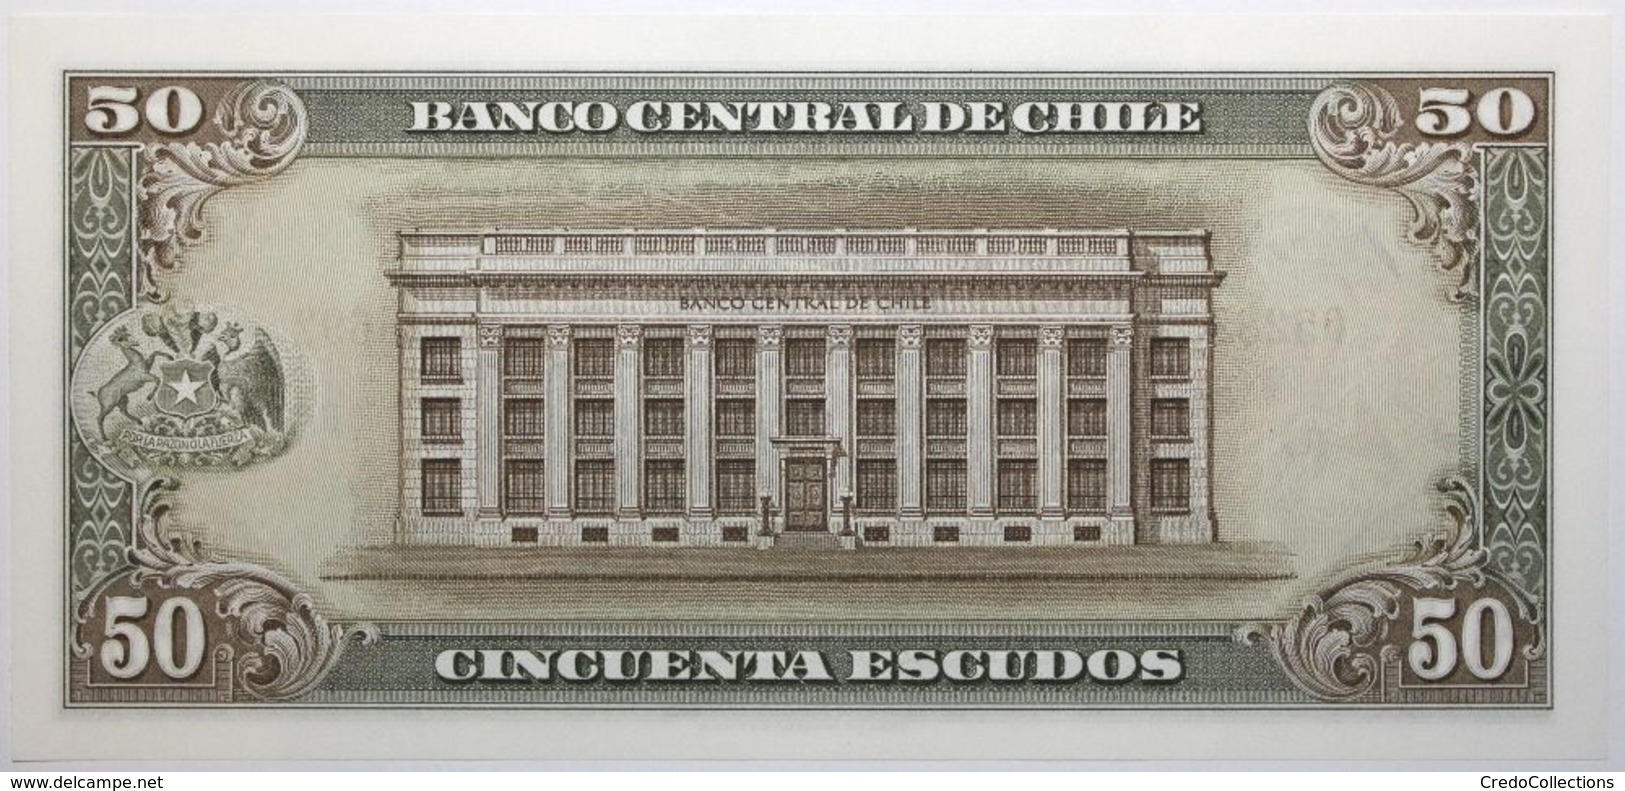 Chili - 50 Escudos - 1970 - PICK 140b.1 - NEUF - Chili